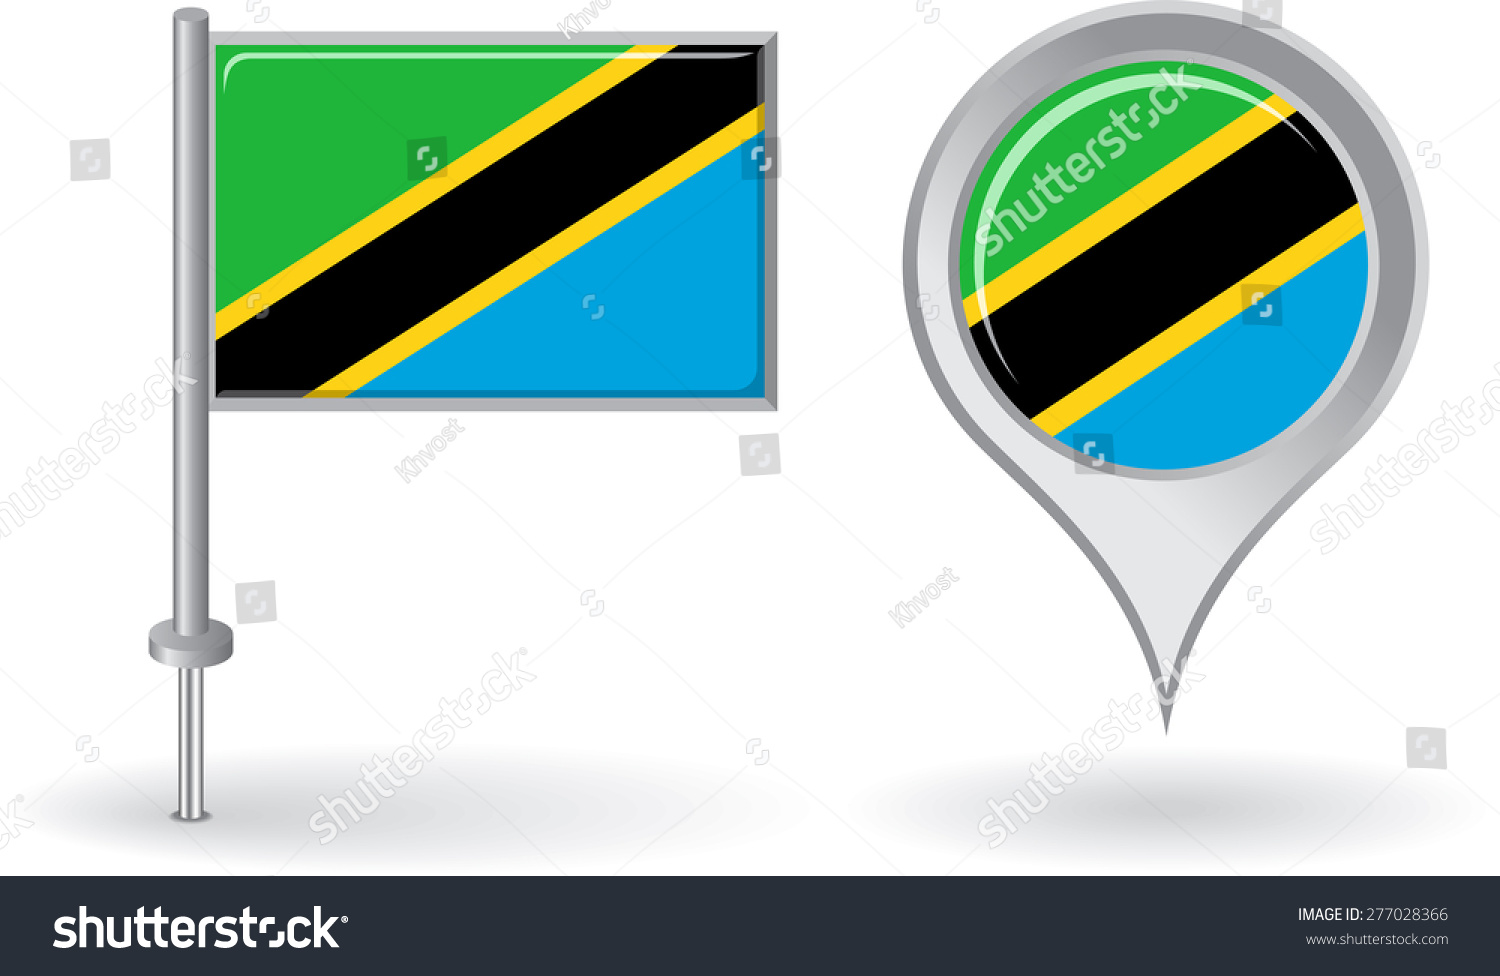 Tanzanian Pin Icon And Map Pointer Flag Vector Royalty Free Stock Vector 277028366 